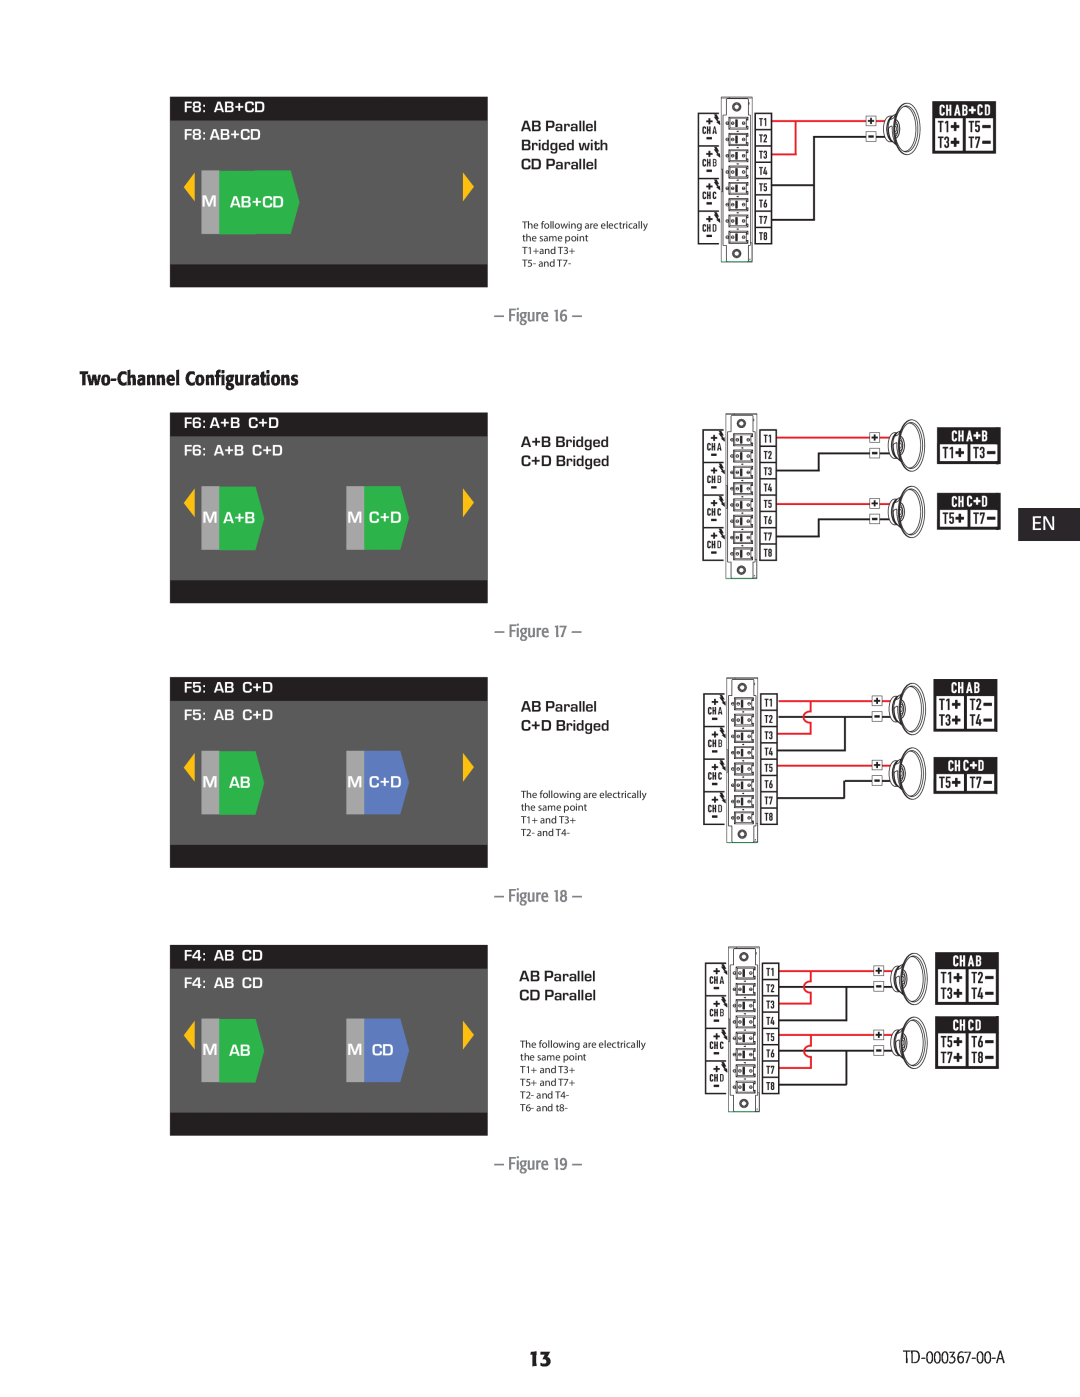 QSC Audio CXD4.5 manual Two-Channel Configurations, M Ab+Cd, AB Parallel Bridged with CD Parallel, A+B Bridged C+D Bridged 